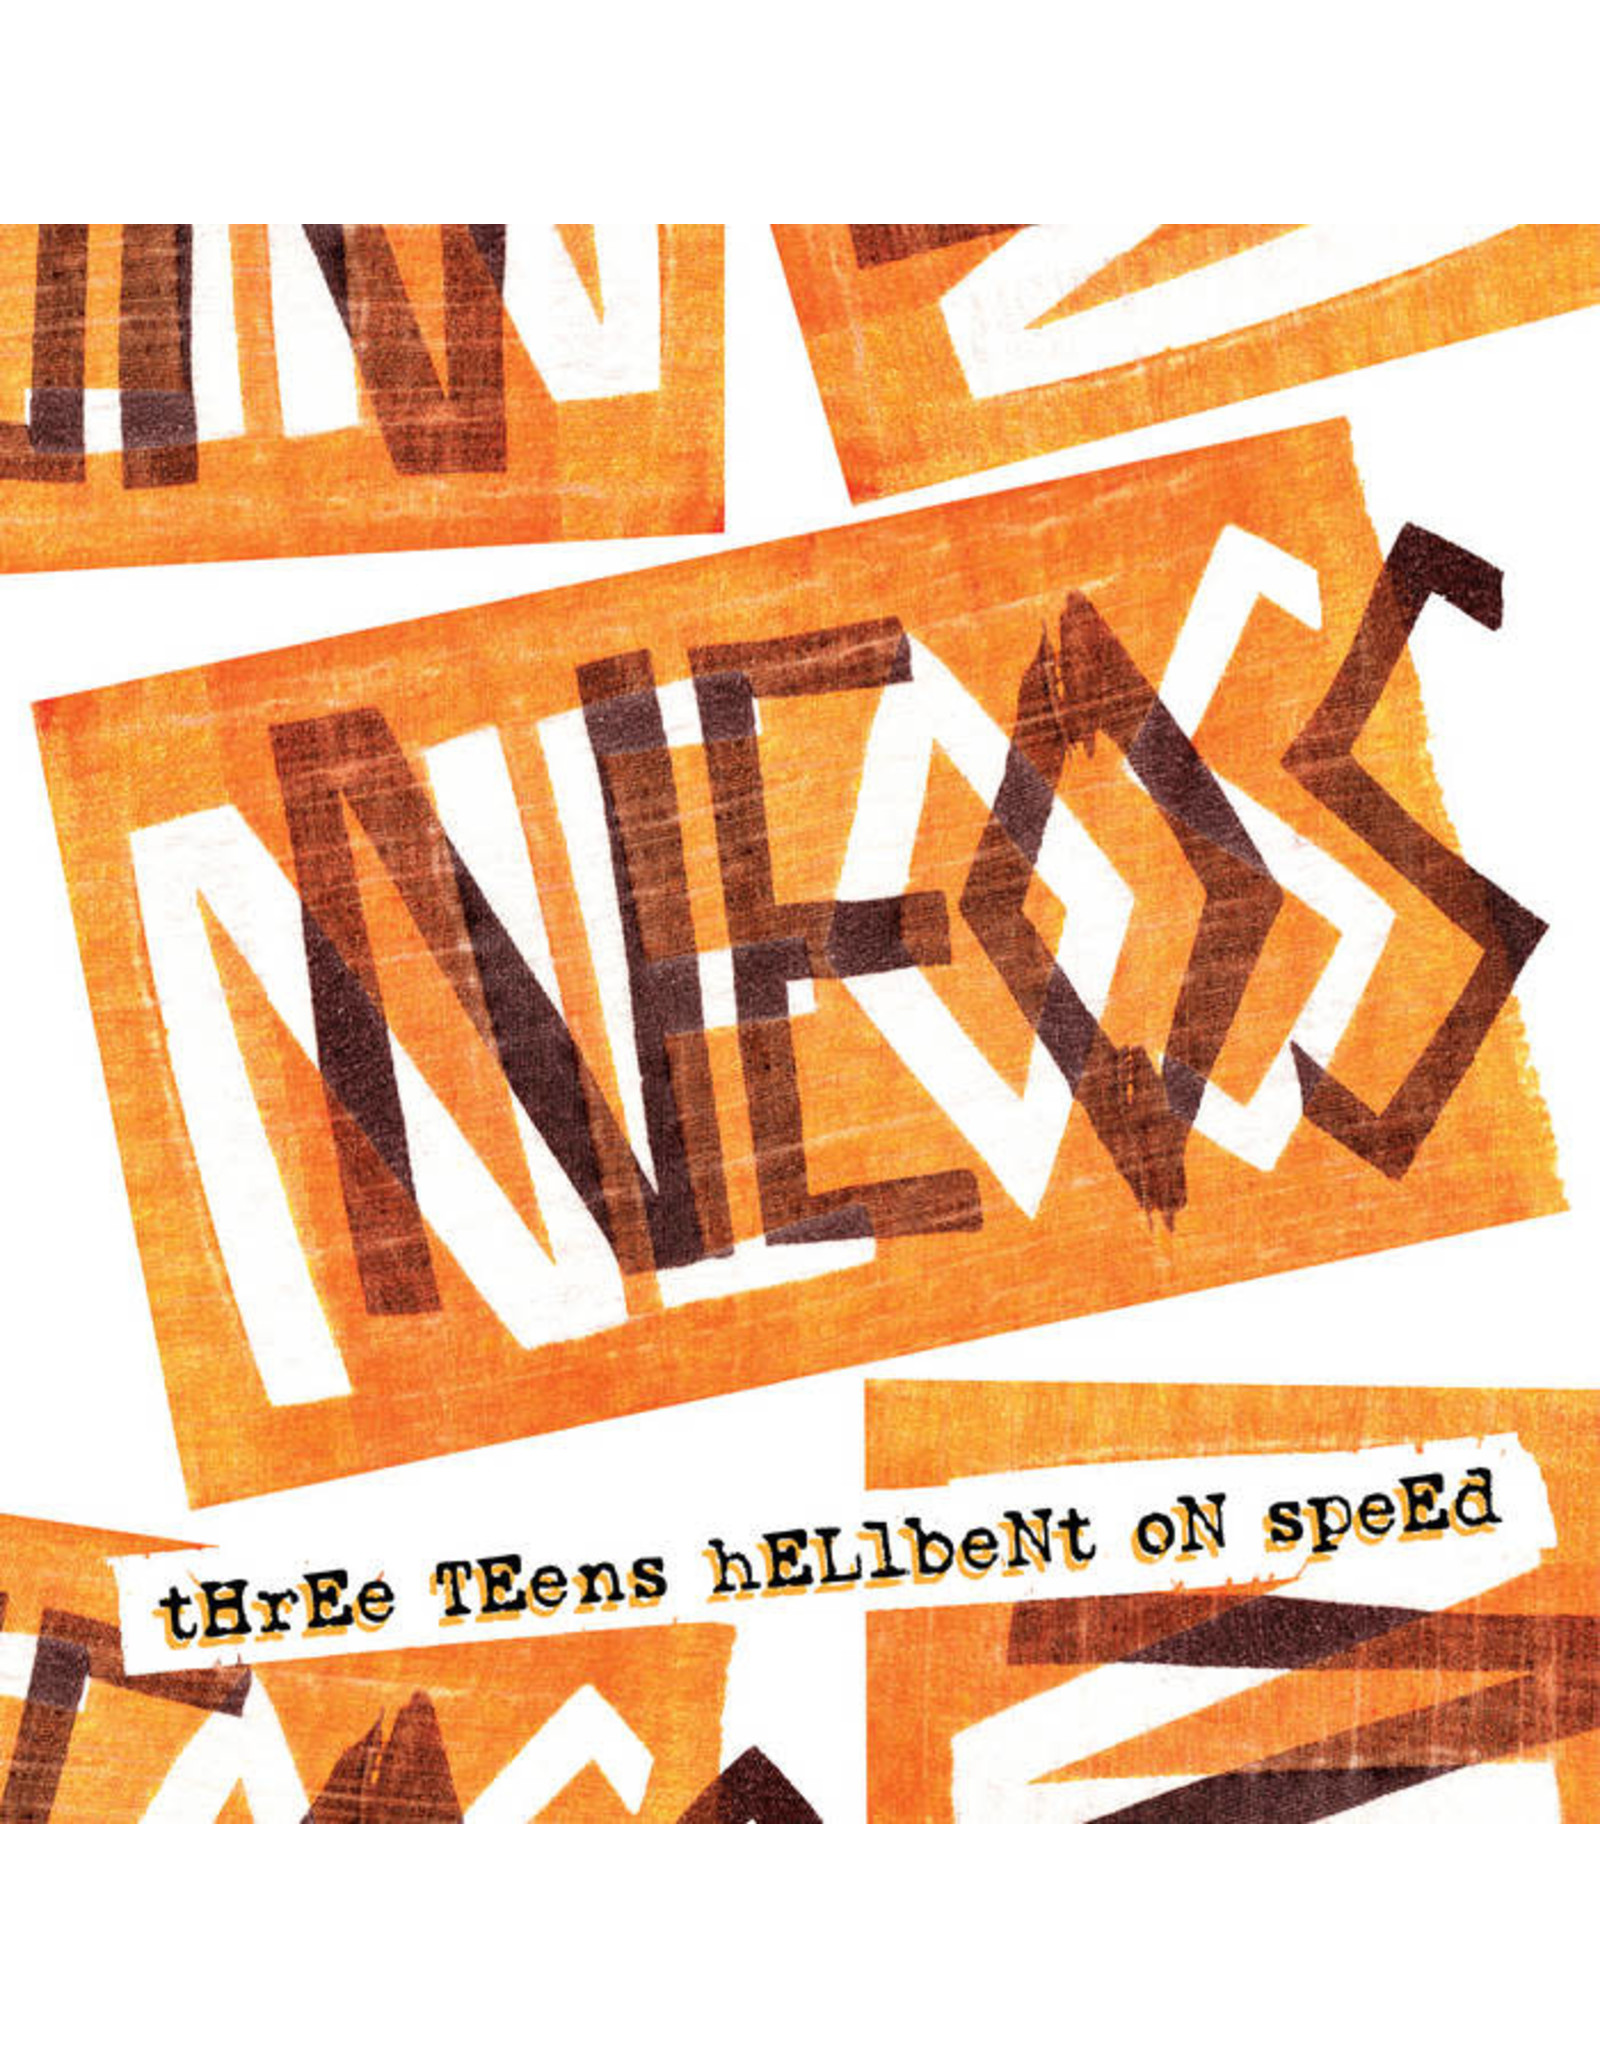 Supreme Echo Neos: Three Teens Hellbent on Speed LP